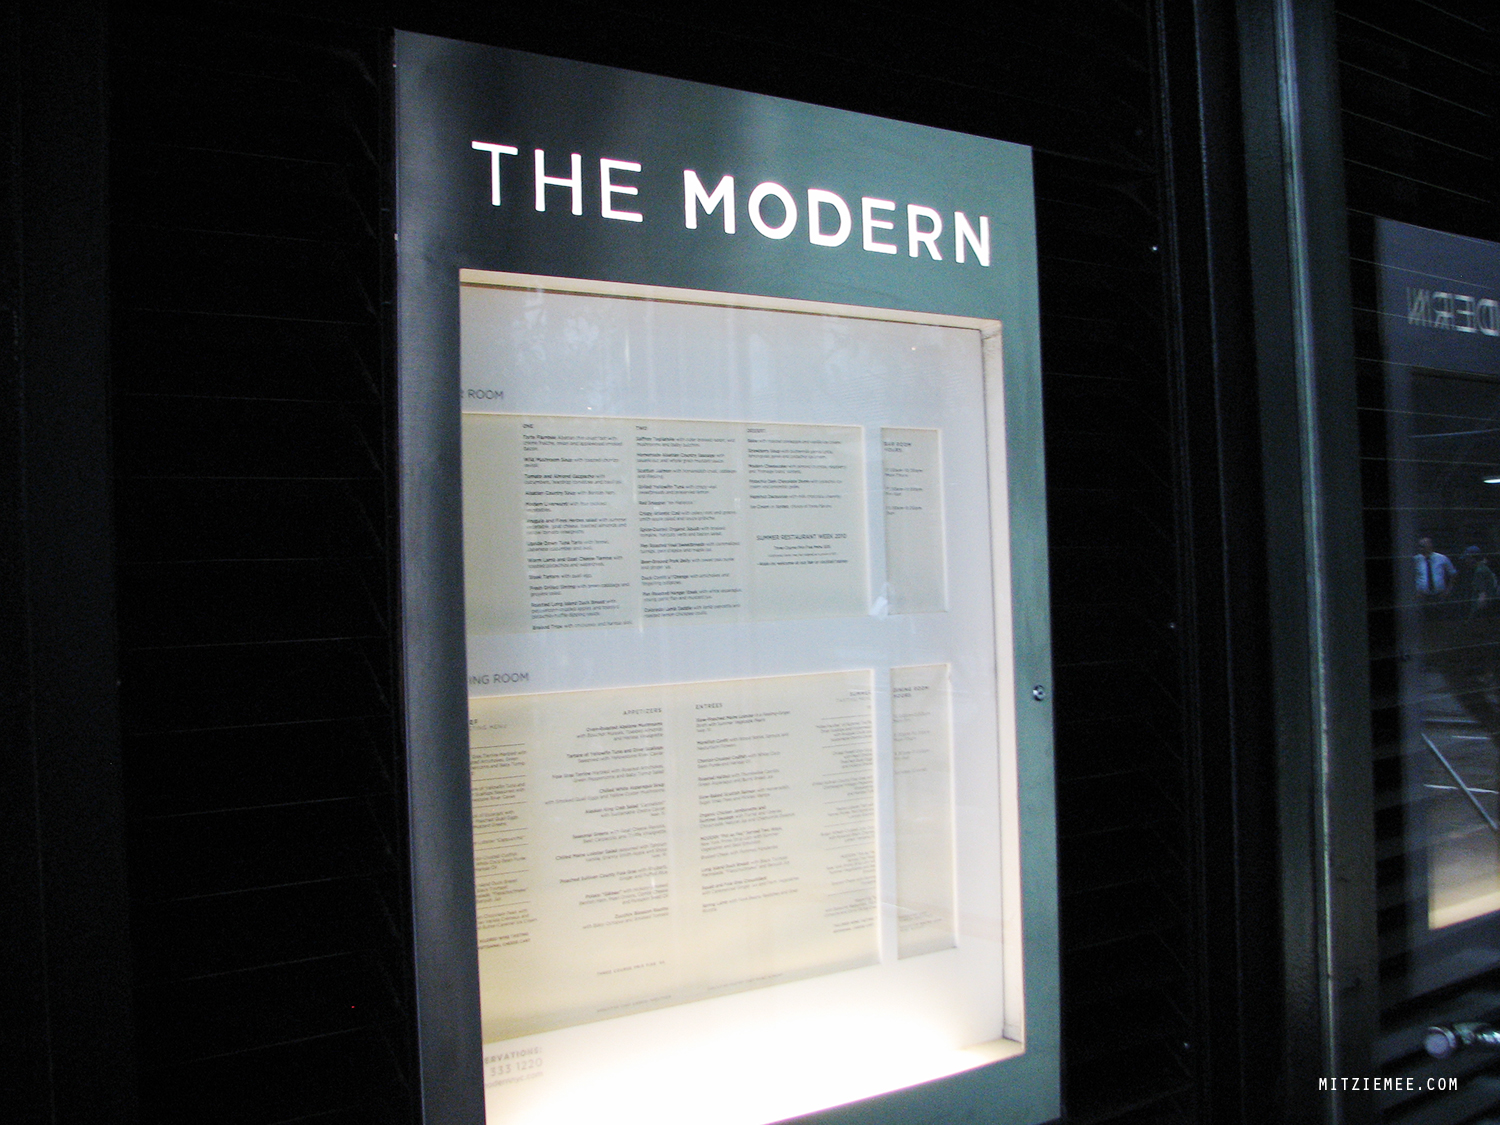 The Modern at MoMA, New York